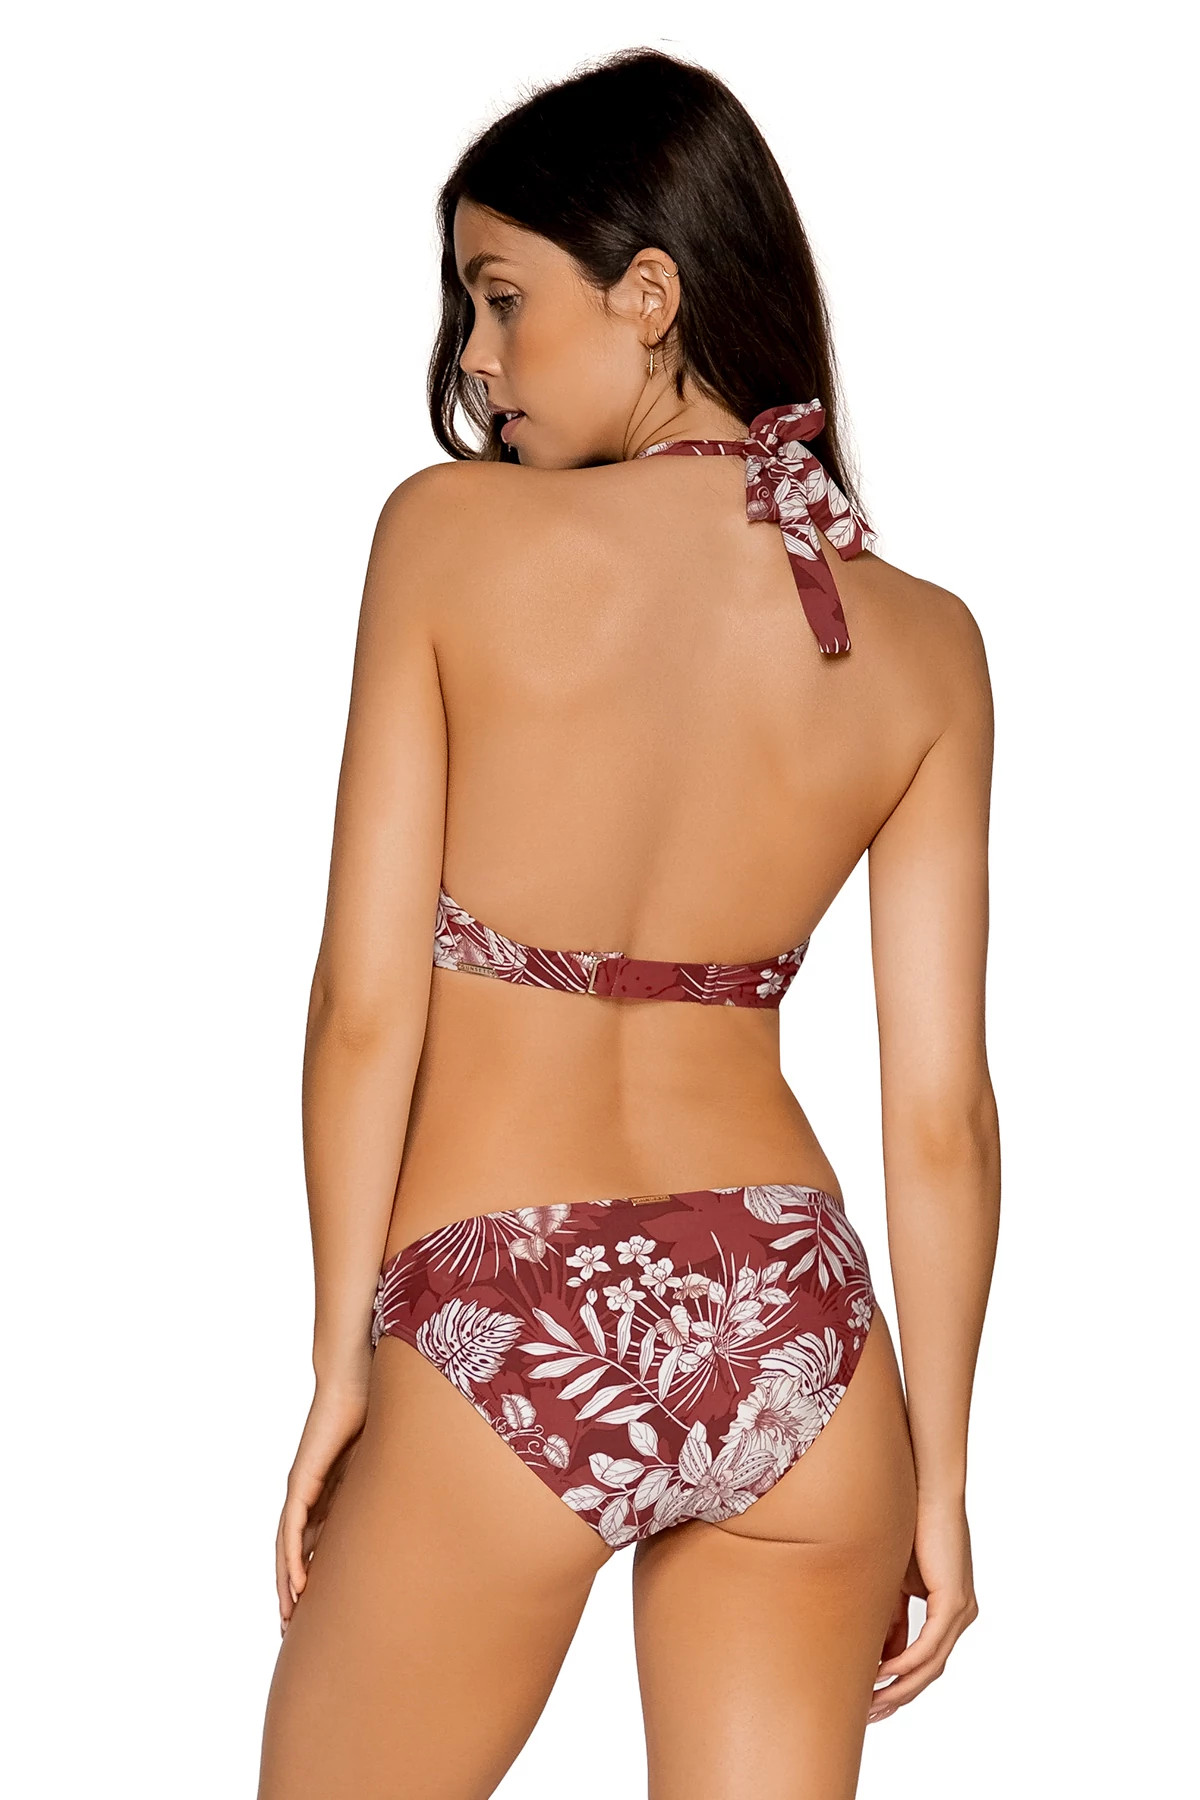 HAWAIIAN HIDEAWAY Muse Underwire Halter Bikini Top (E-H Cup) image number 2